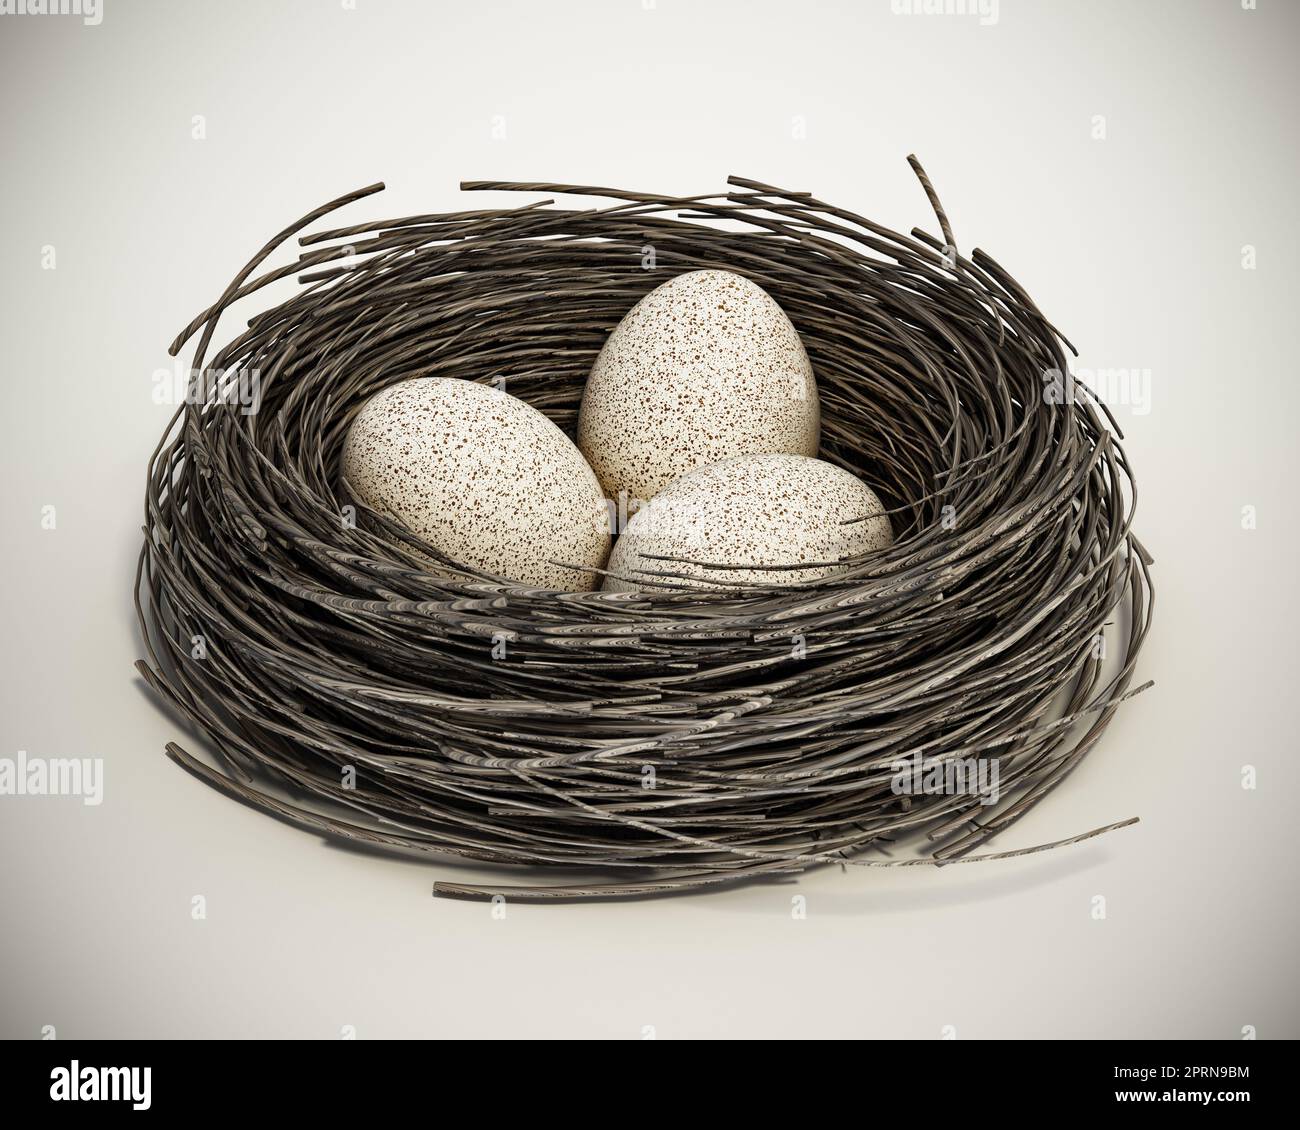 Three bird eggs in the nest Stock Photo by ©borjomi88 170275320